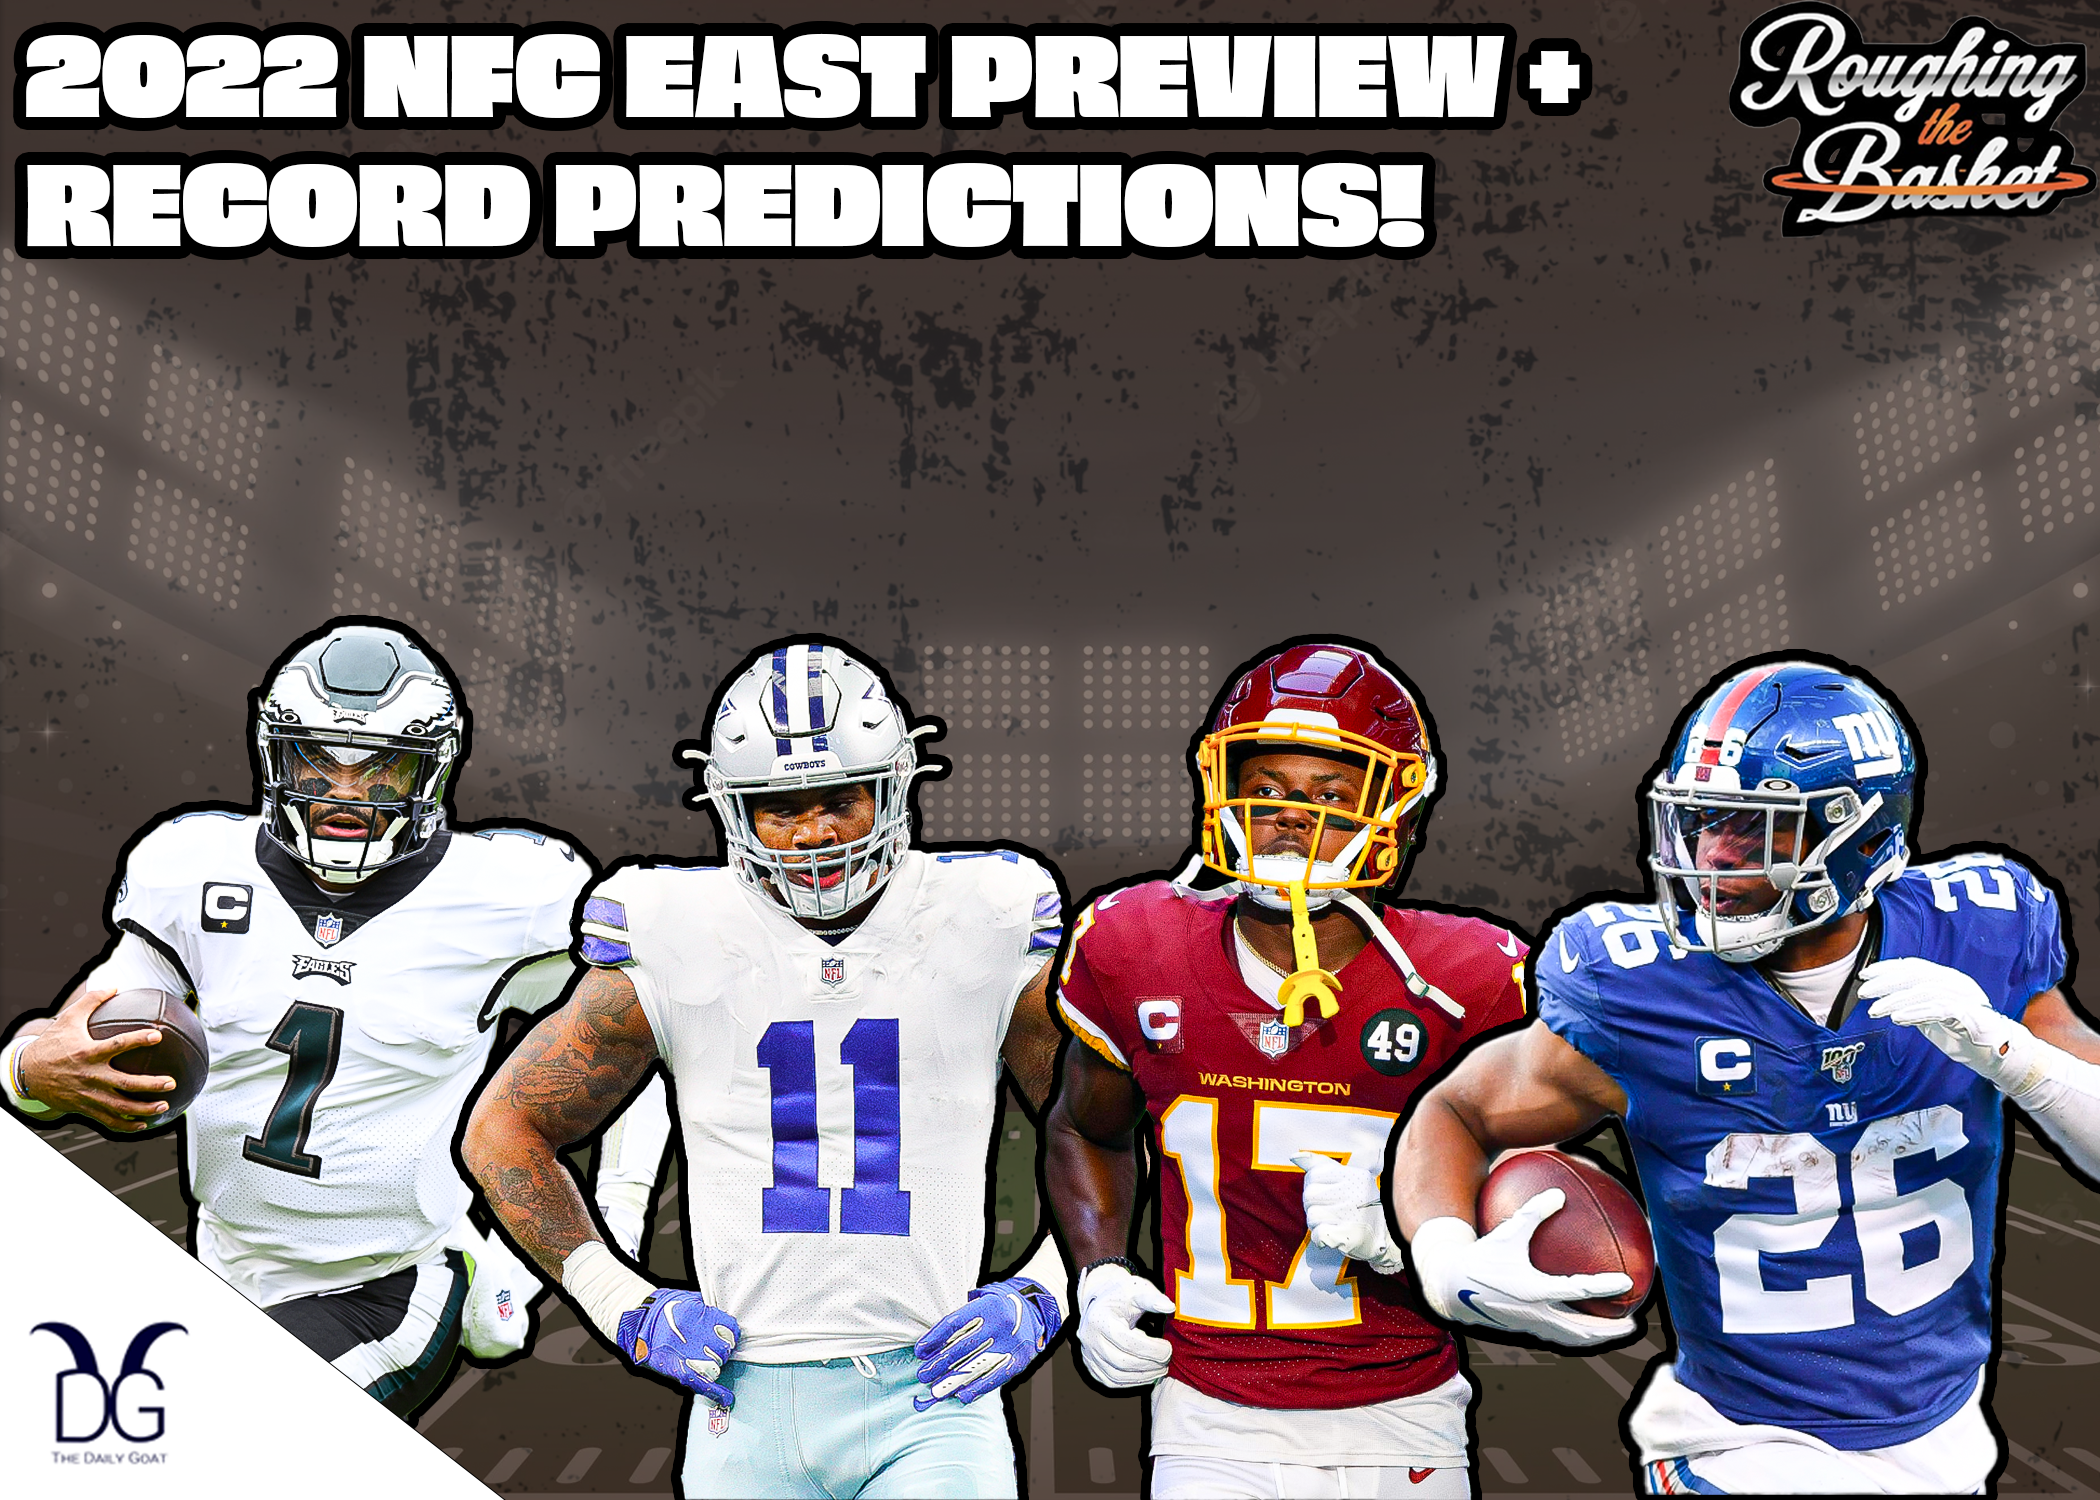 nfc east predictions